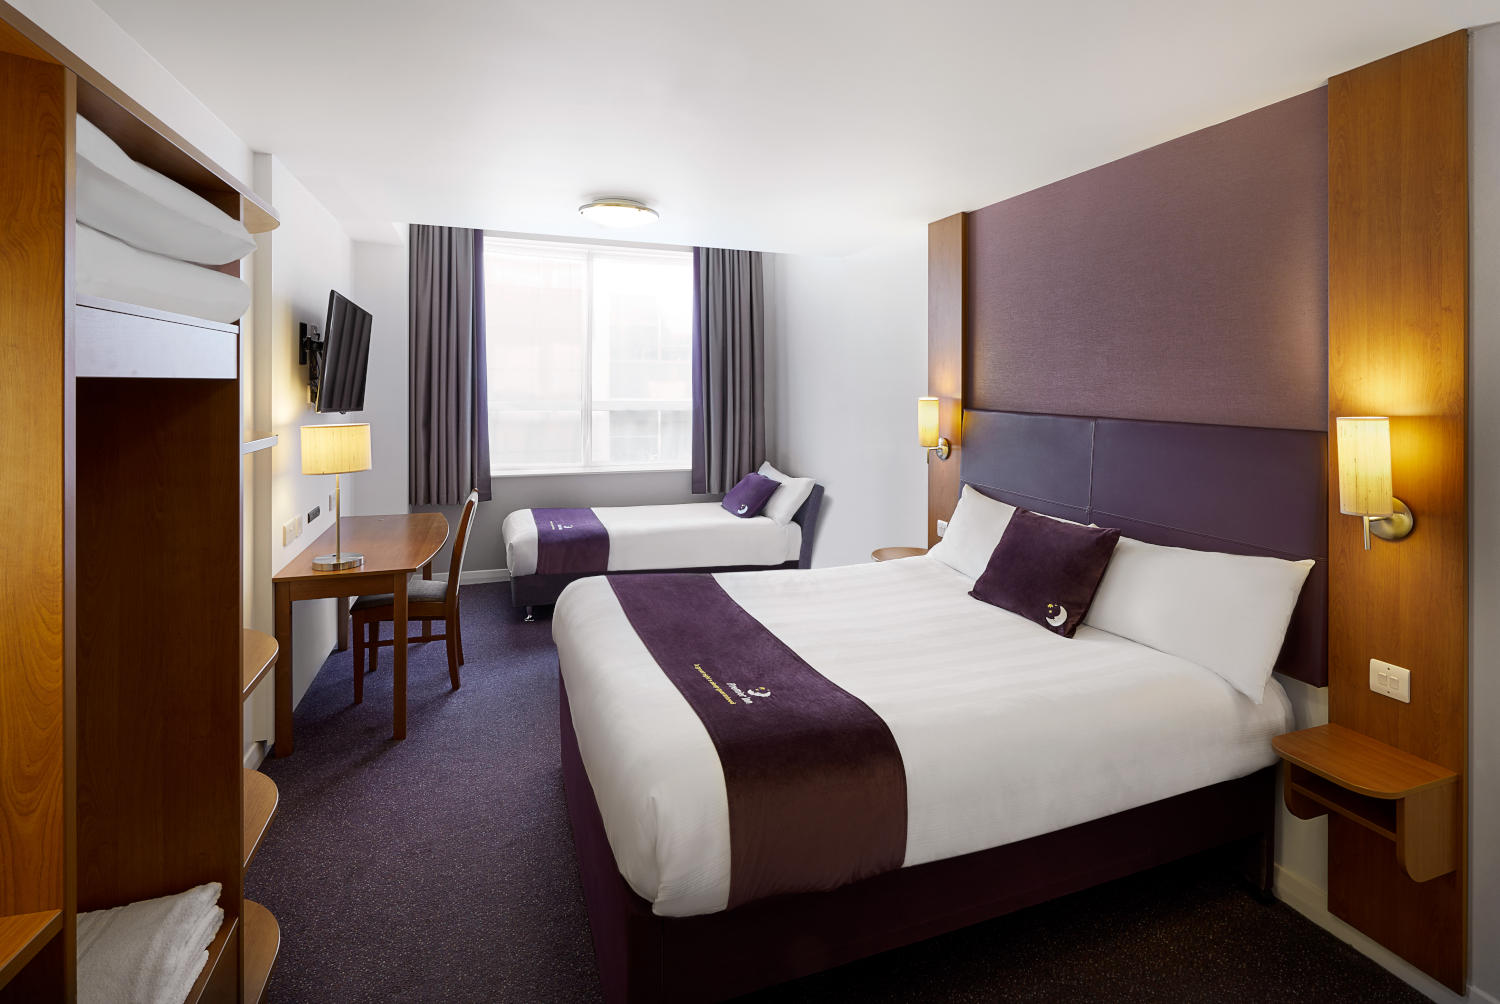 Premier Inn bedroom Premier Inn Southampton (Eastleigh) hotel Eastleigh 03333 219004